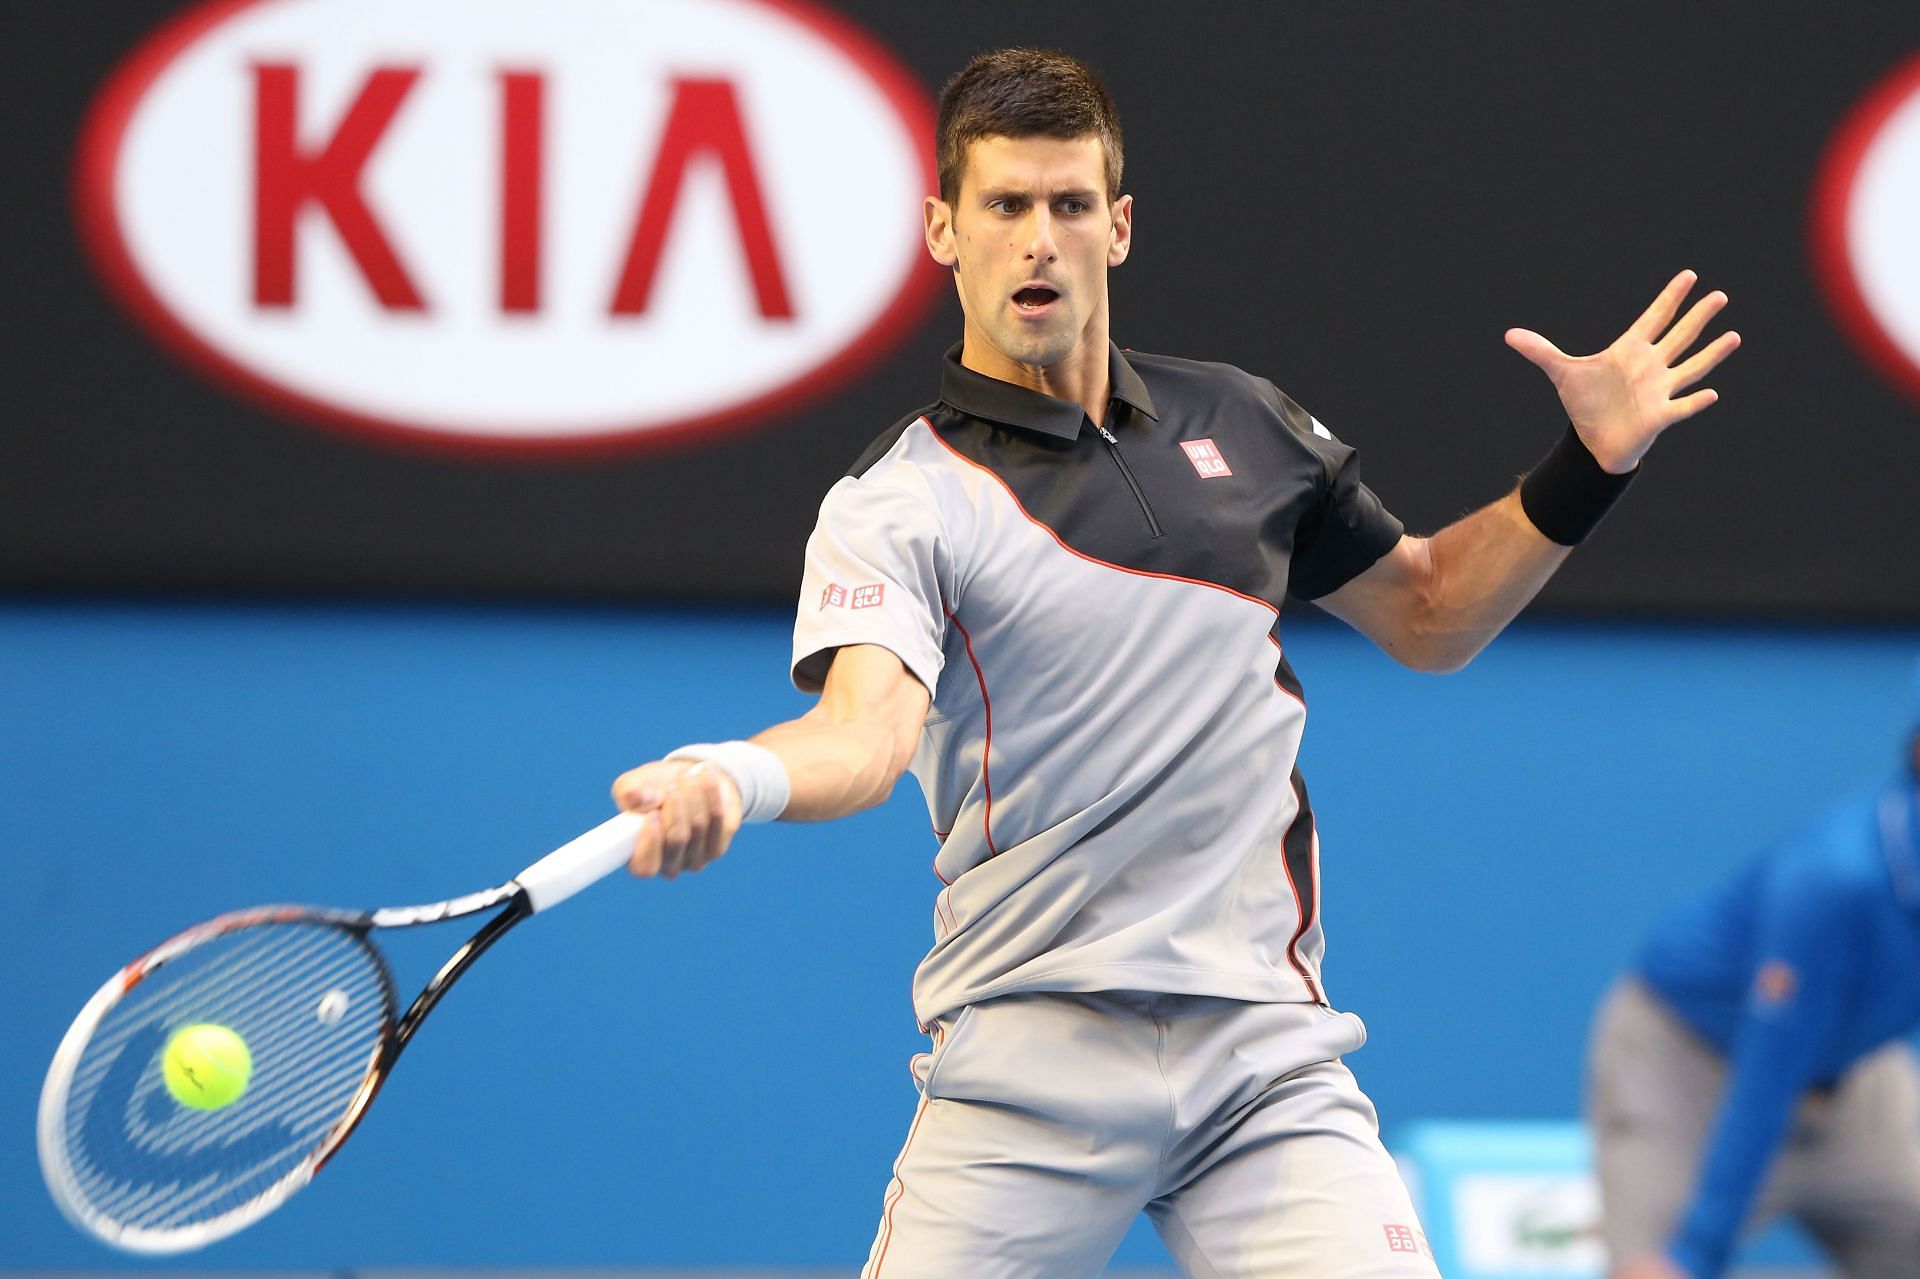 Novak Djokovic at the 2014 Australian Open Quarterfinal against Stanislas Wawrinka